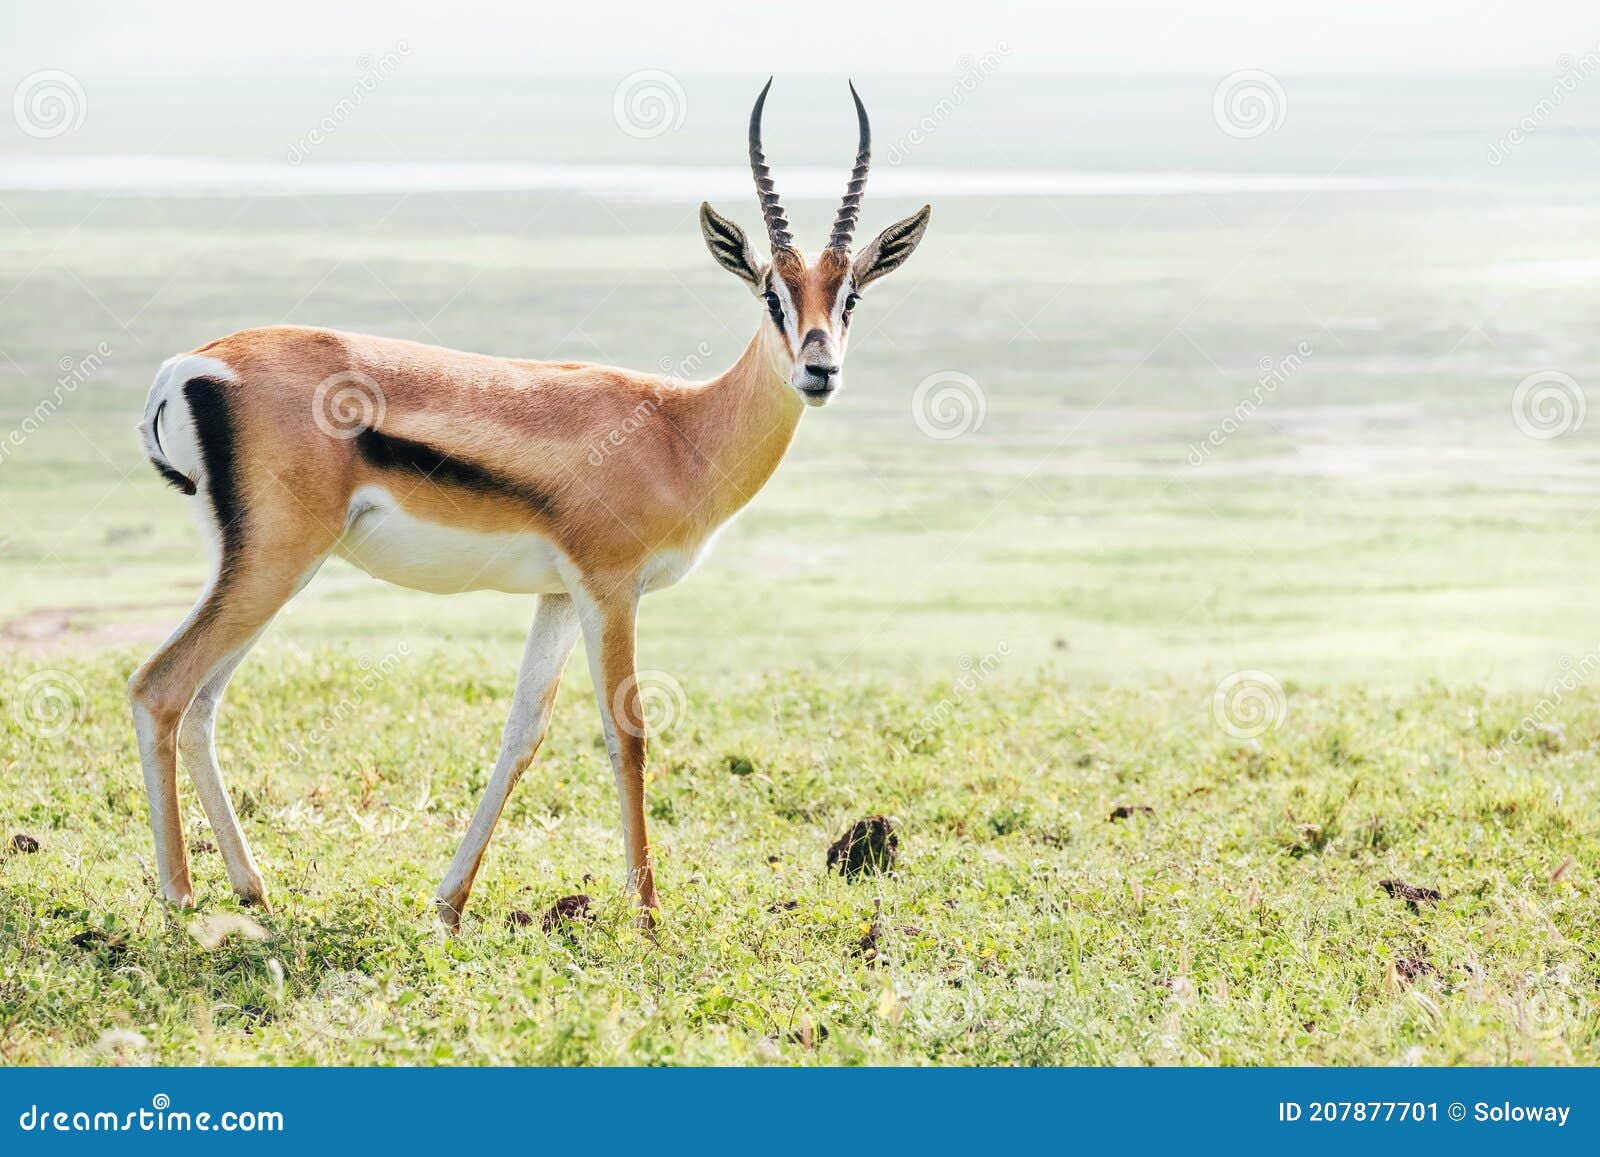 thomson`s gazelle wild animal portrait. ngorongoro crater conservation area, tanzania